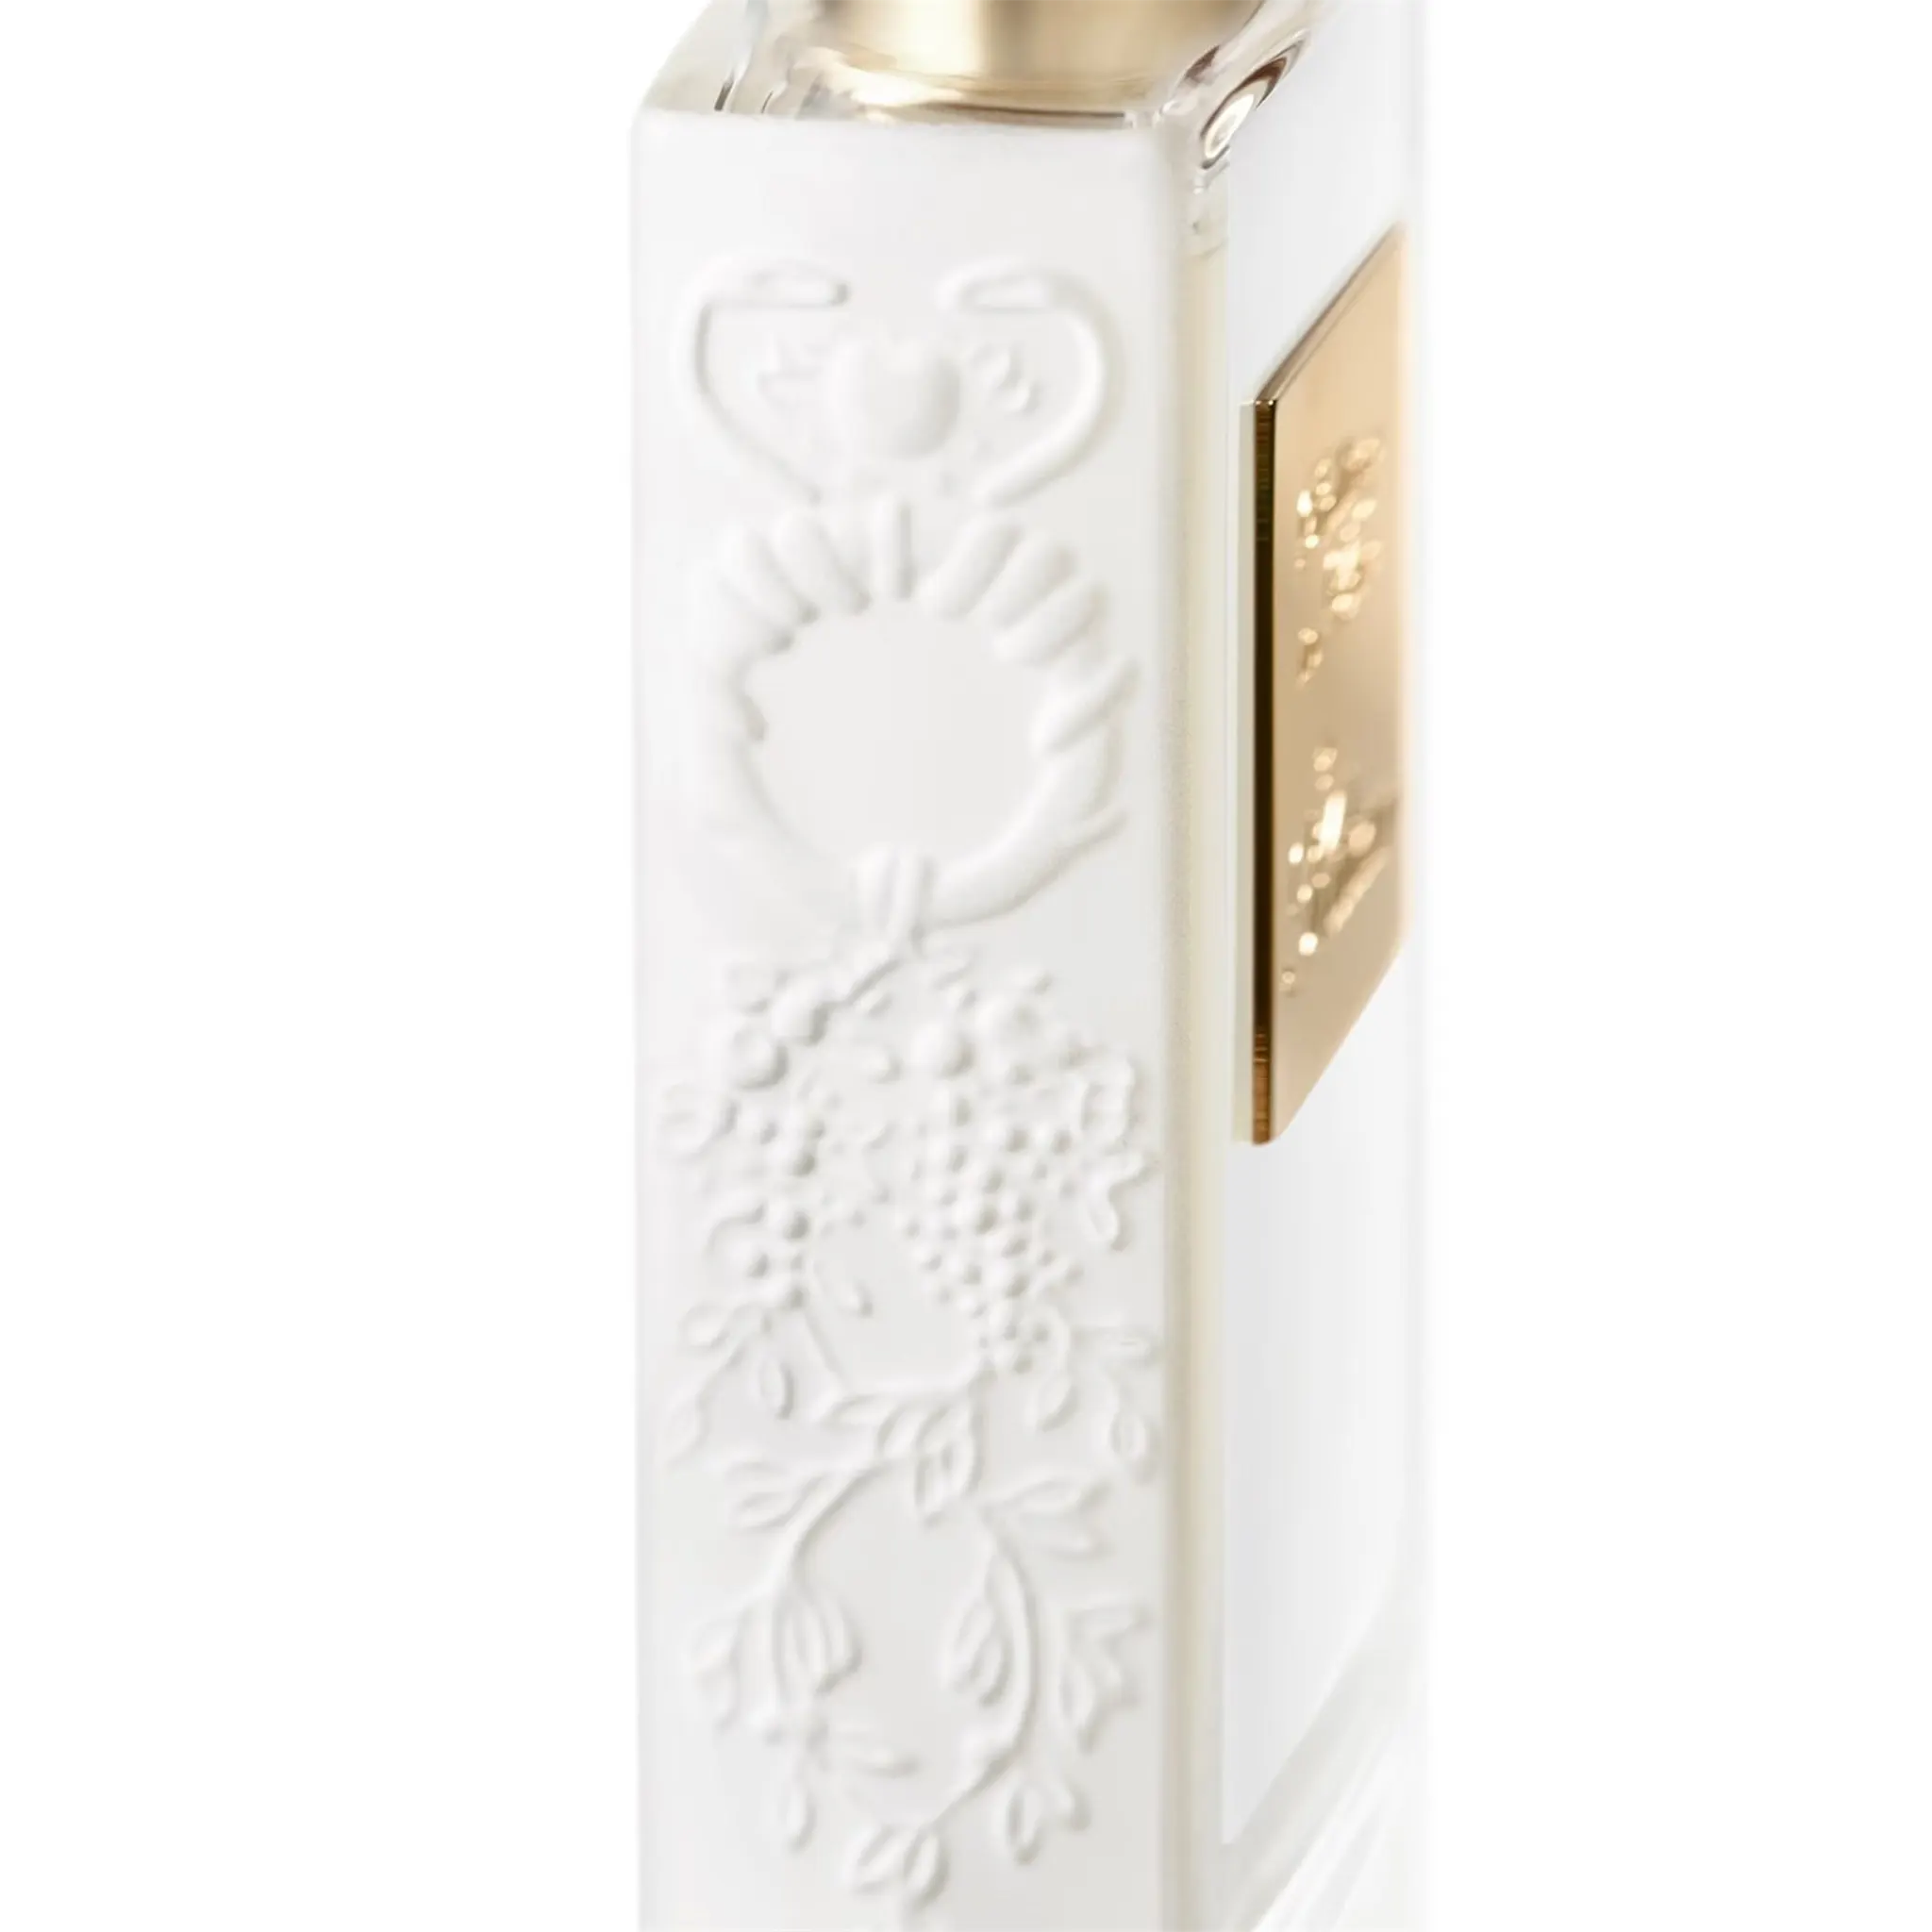 Side view of Killian Paris Woman in Gold Perfume 50ml 46318408